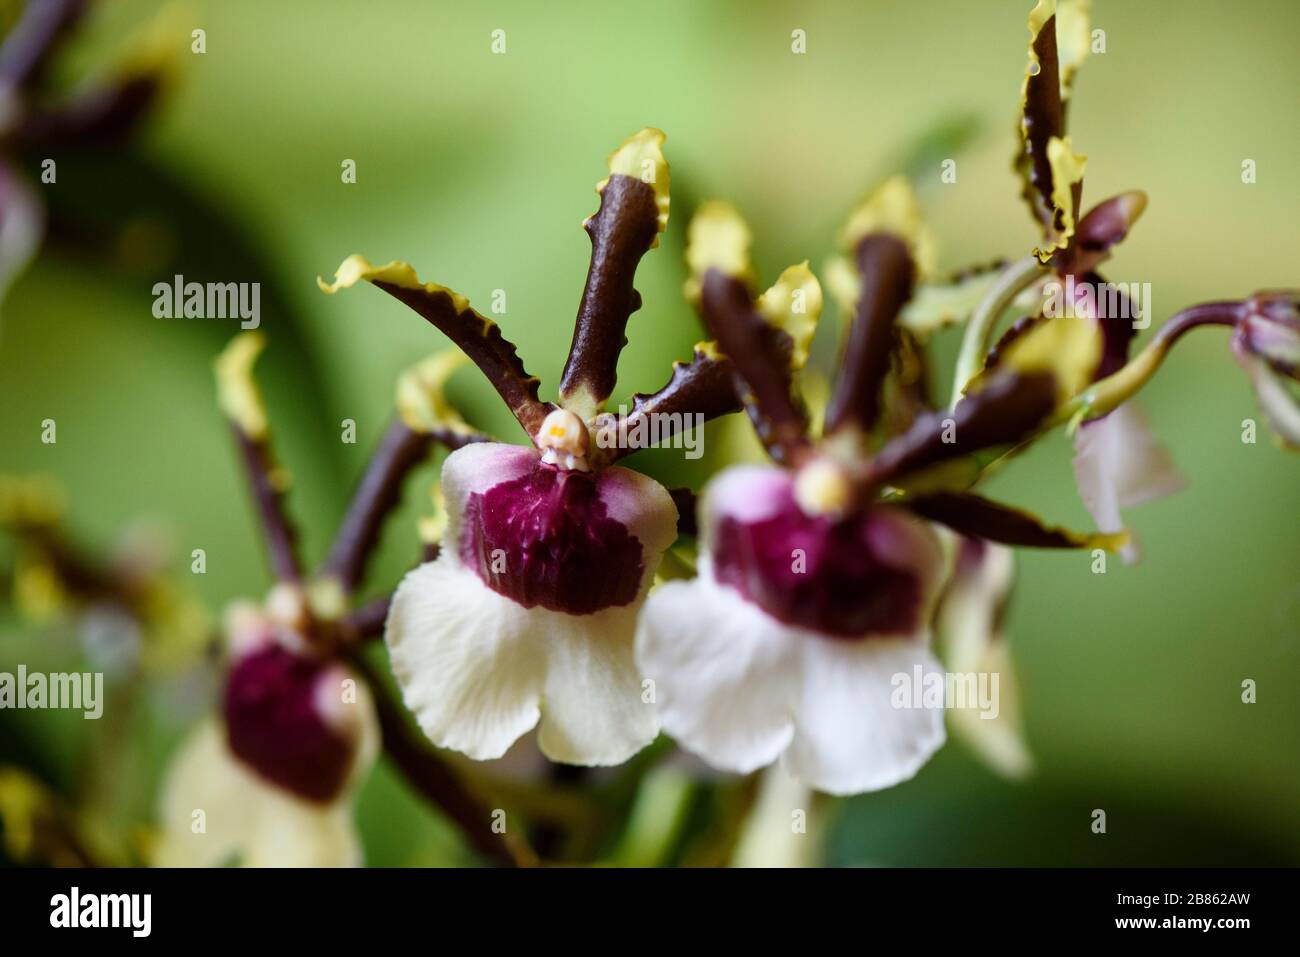 Rare Orchid, Close-up, Macro Stock Photo